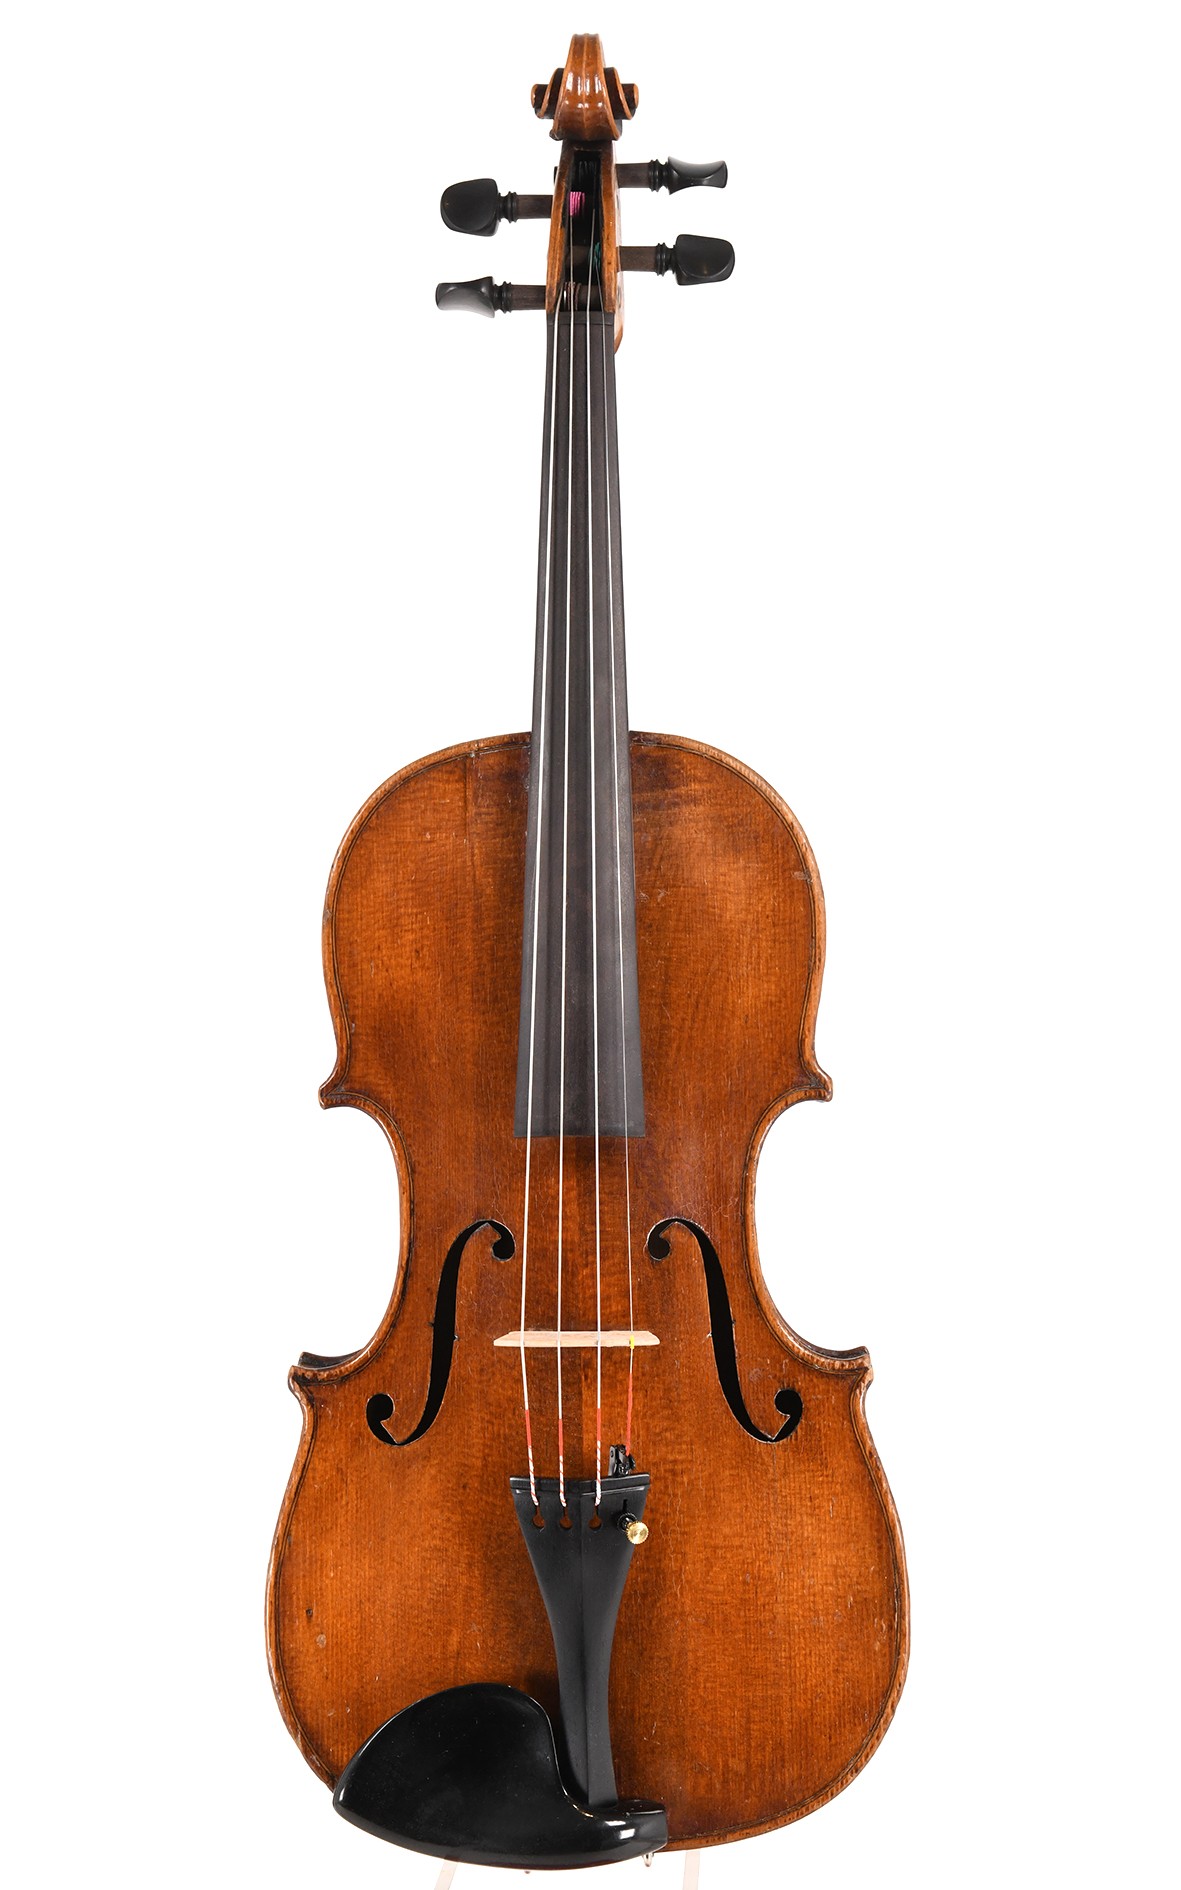 Hopf violin